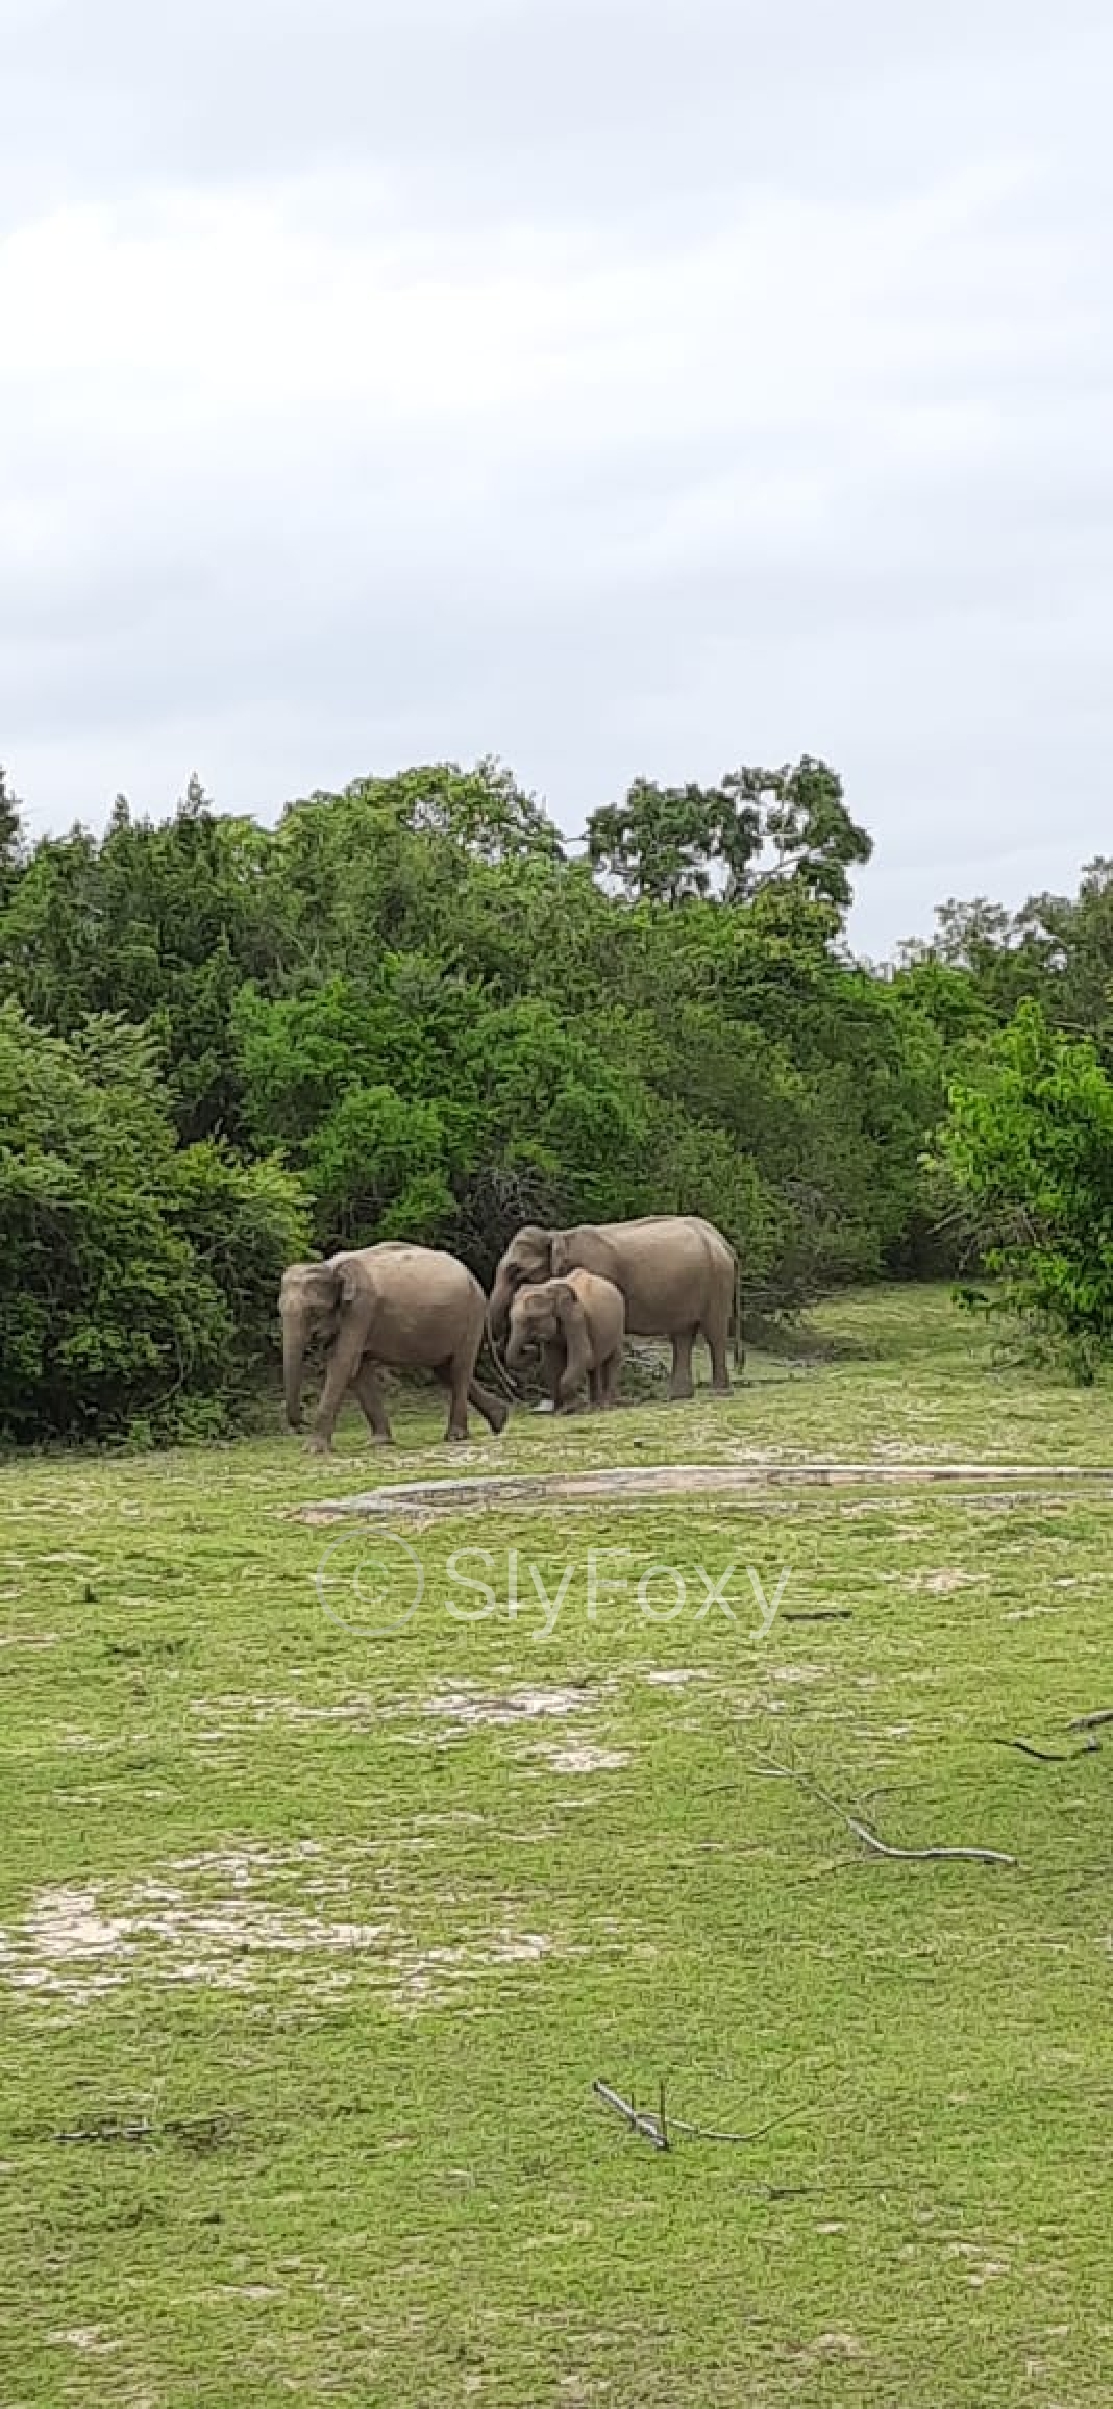 Sri Lankan Elephant rendition image